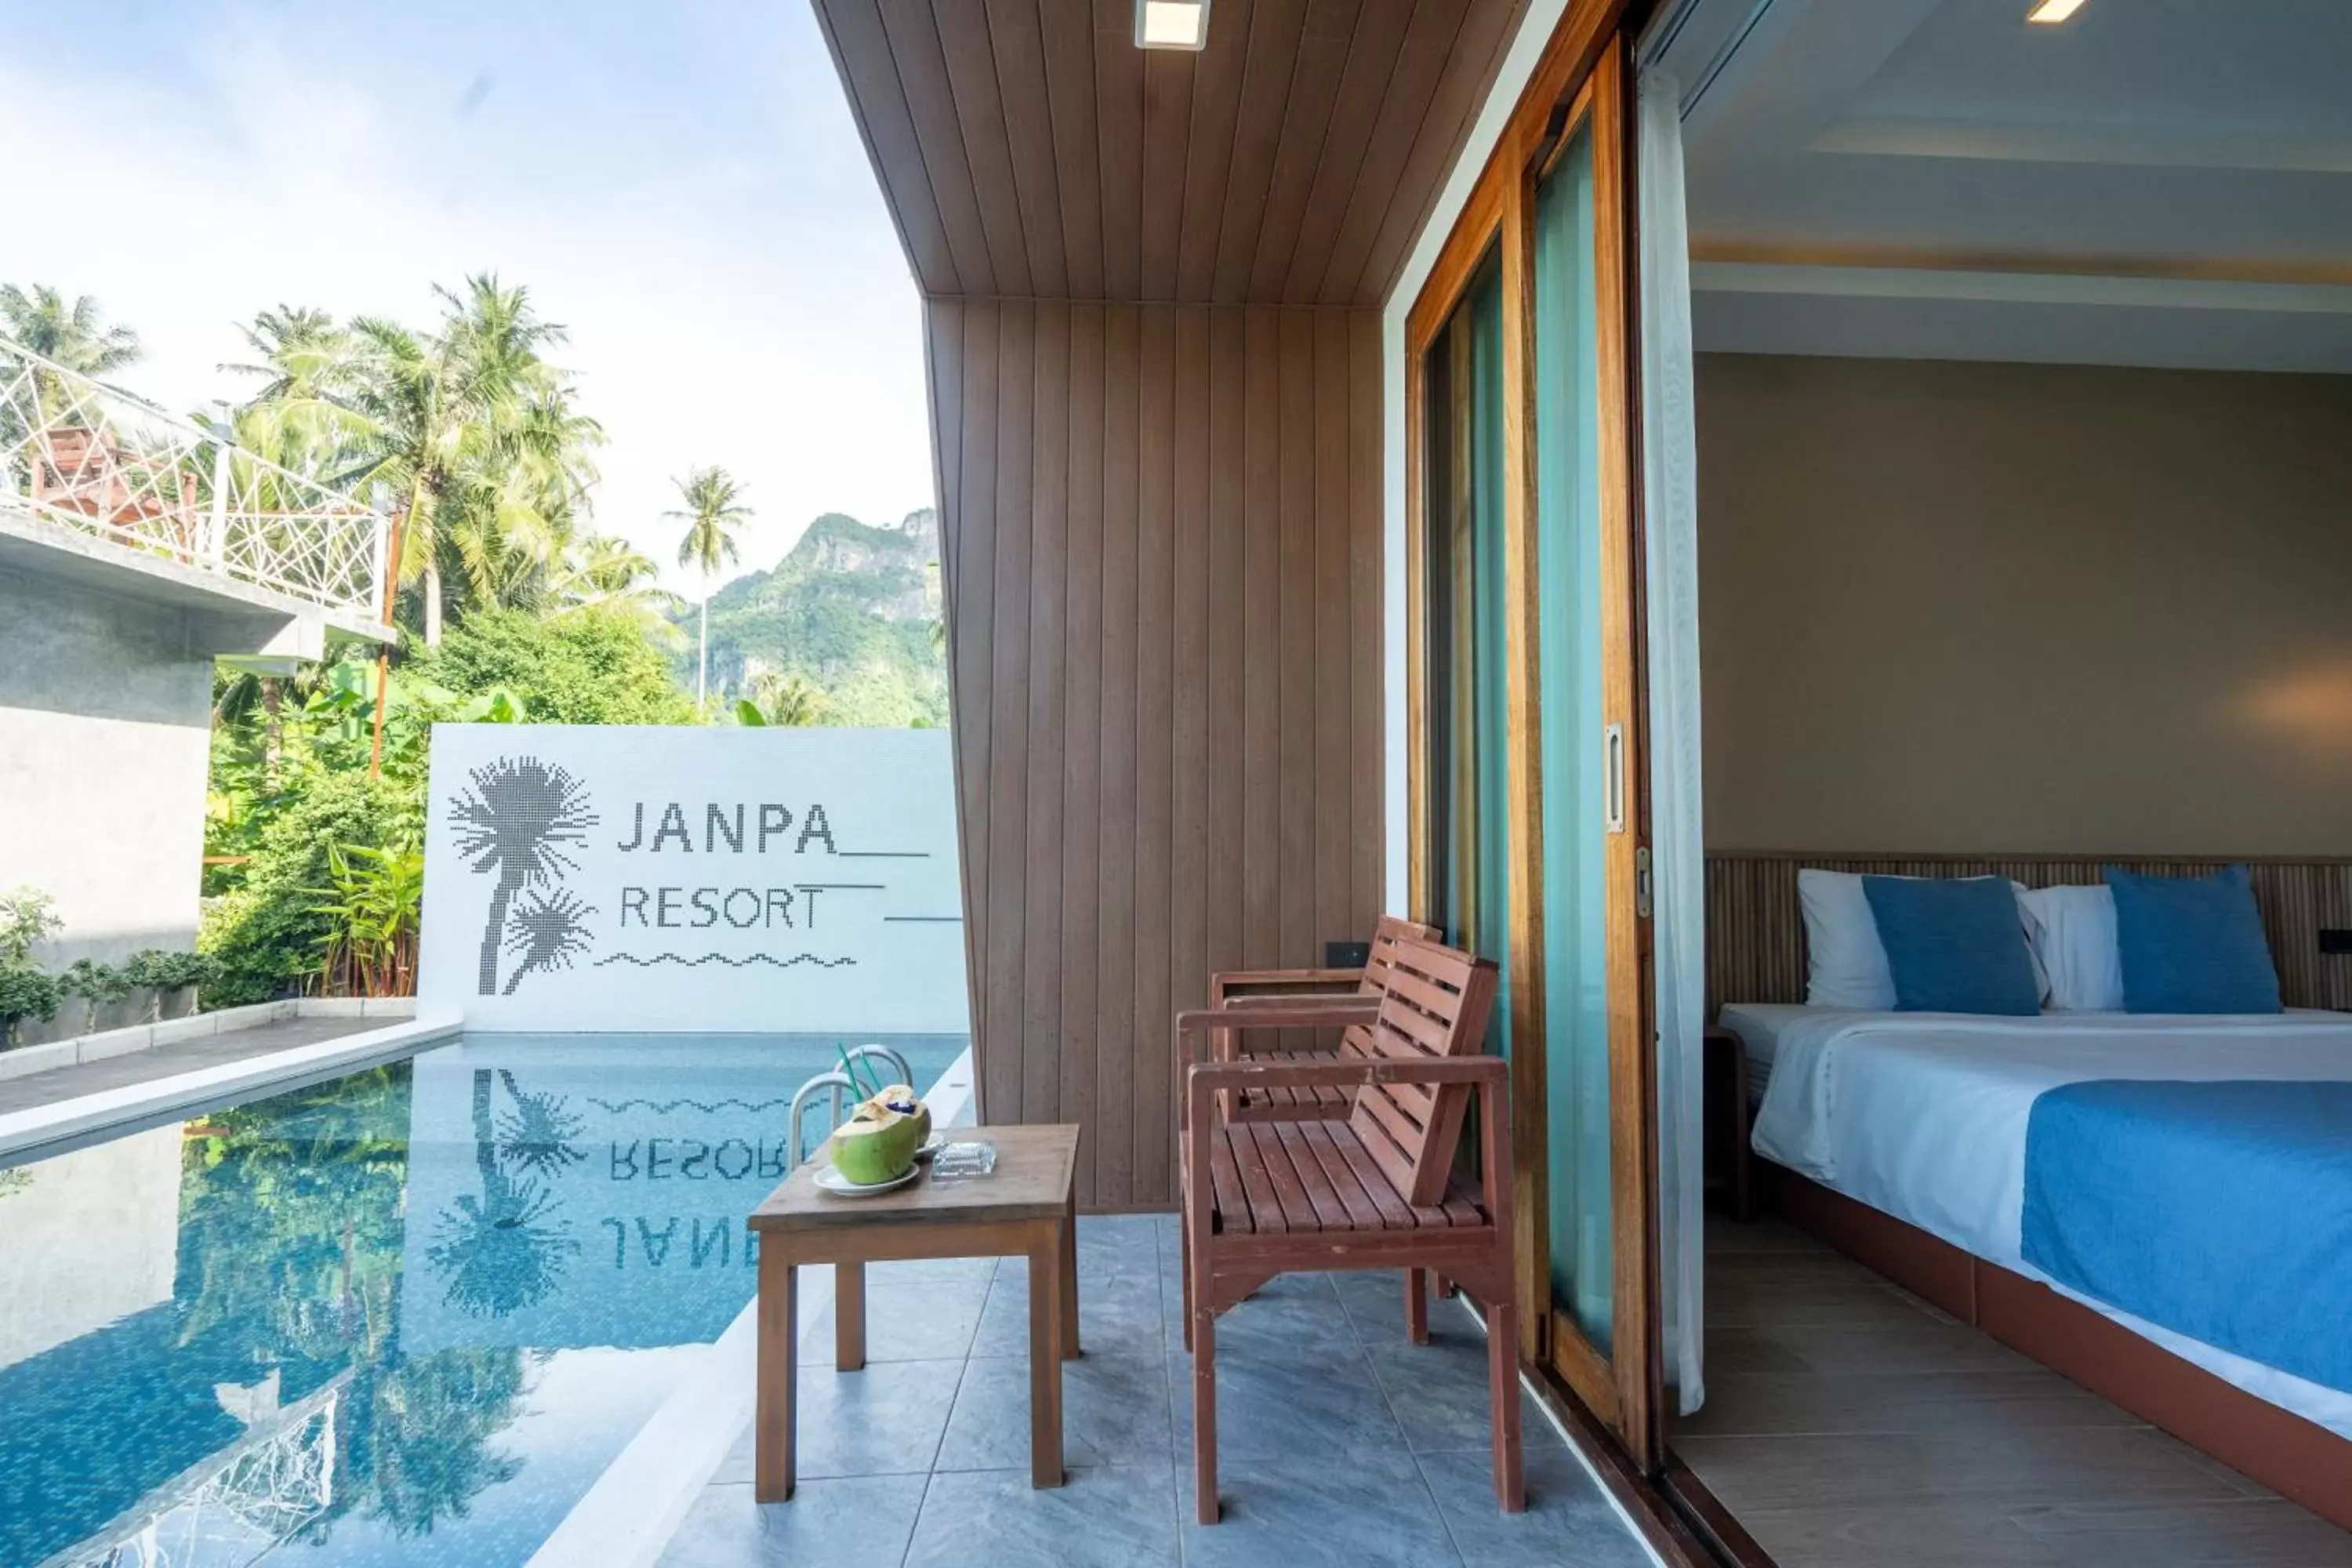 Janpa Resort